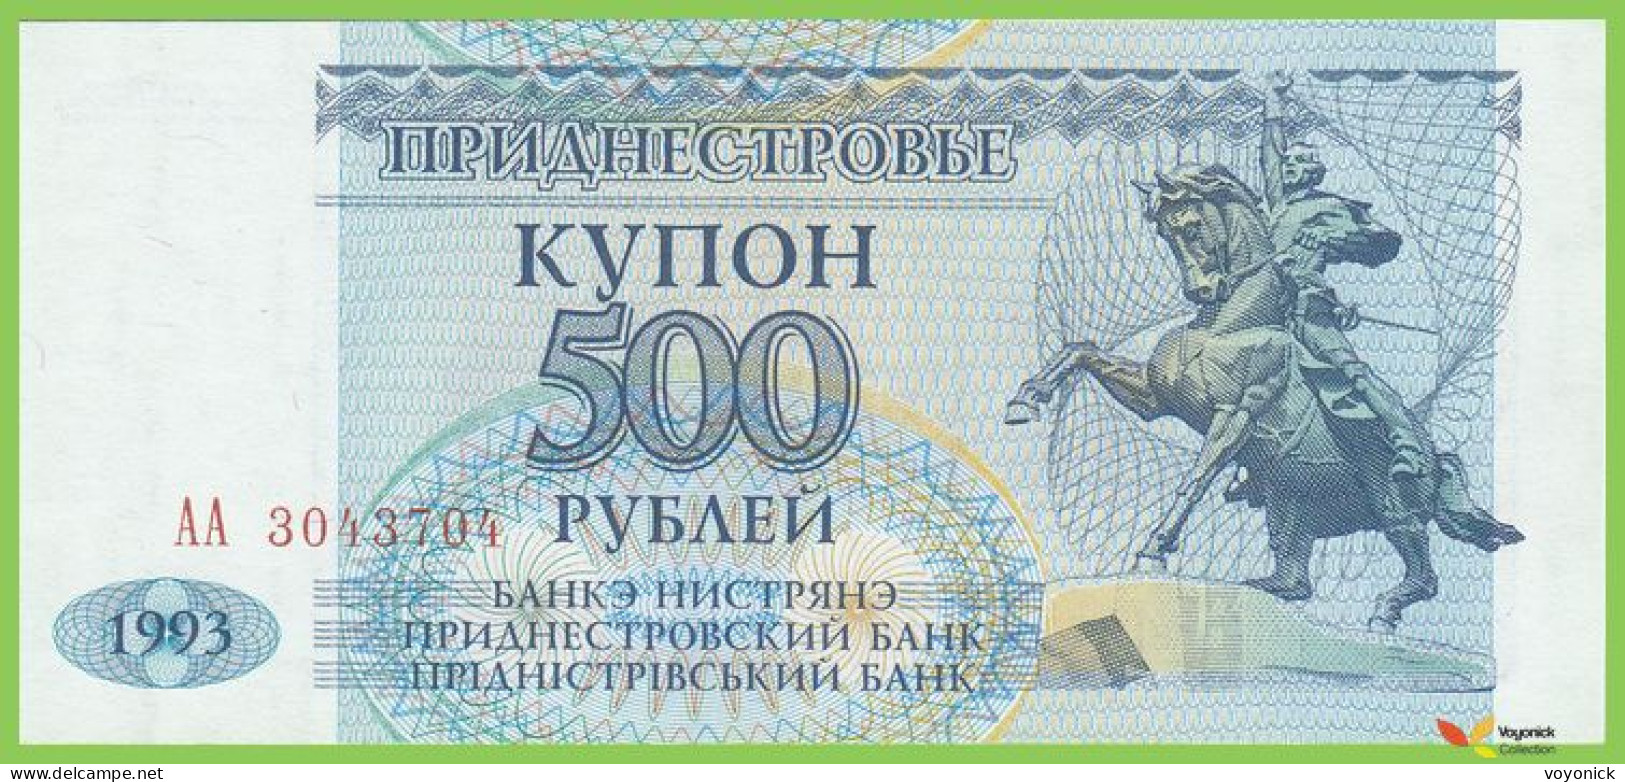 Voyo MOLDOVA (Transdniester) 500 Rubley 1993(1994) P22 B124a АA UNC - Moldova